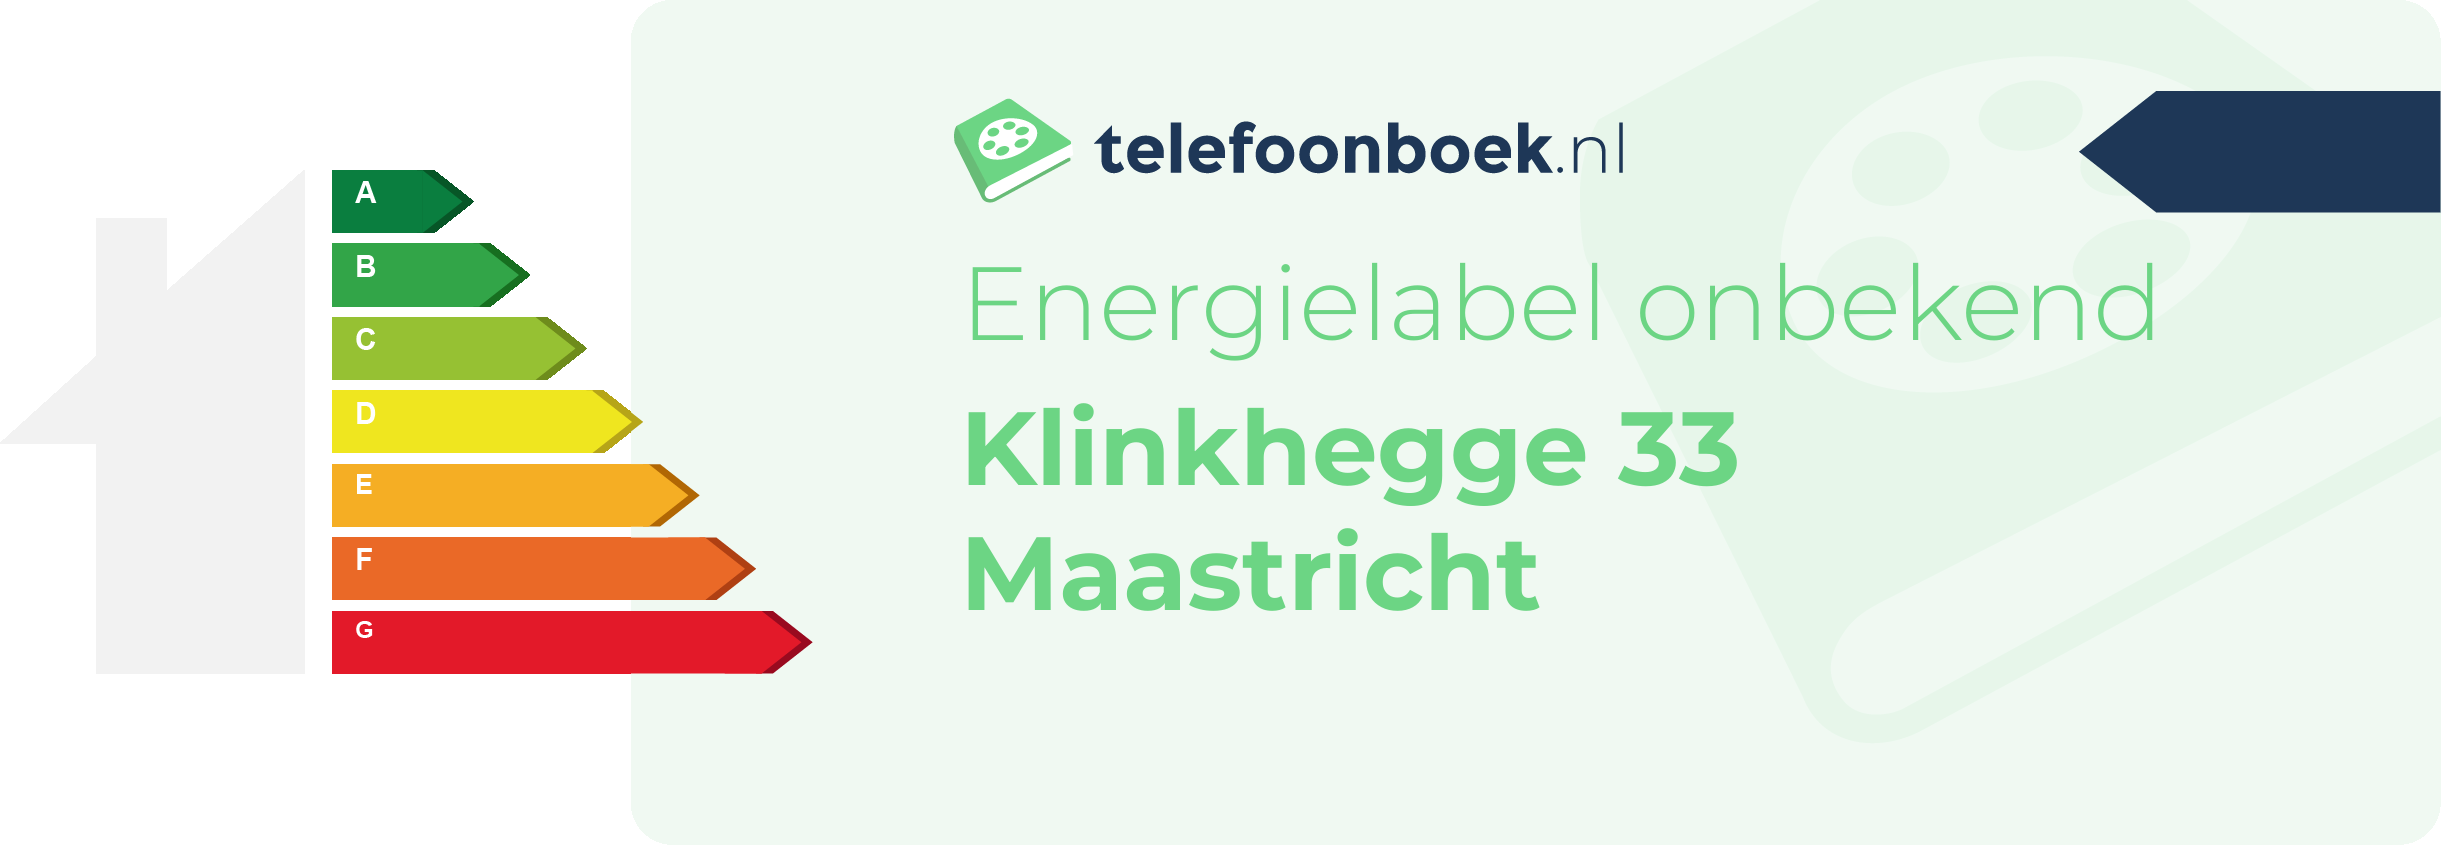 Energielabel Klinkhegge 33 Maastricht